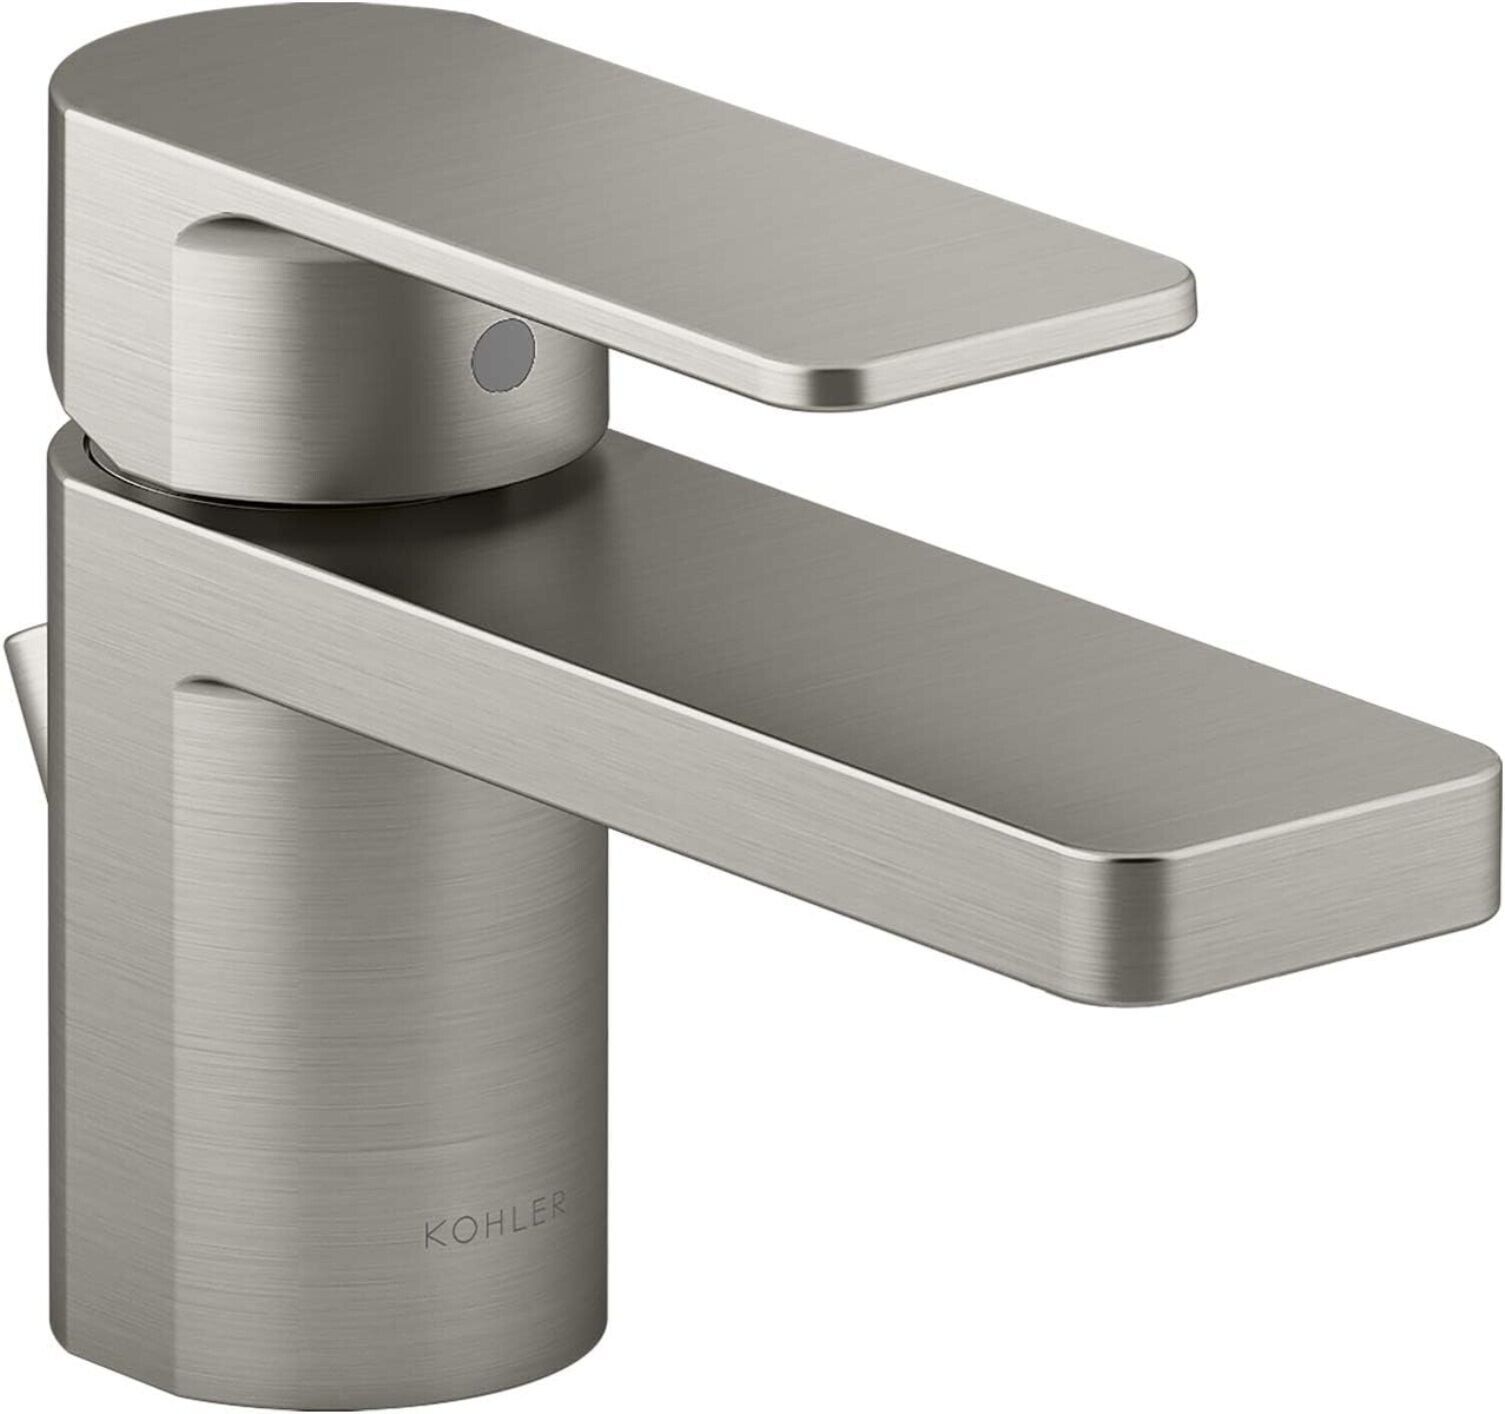 Primary image for KOHLER K-24804-4-BN Parallel Low Single-Handle Bathroom Sink Faucet